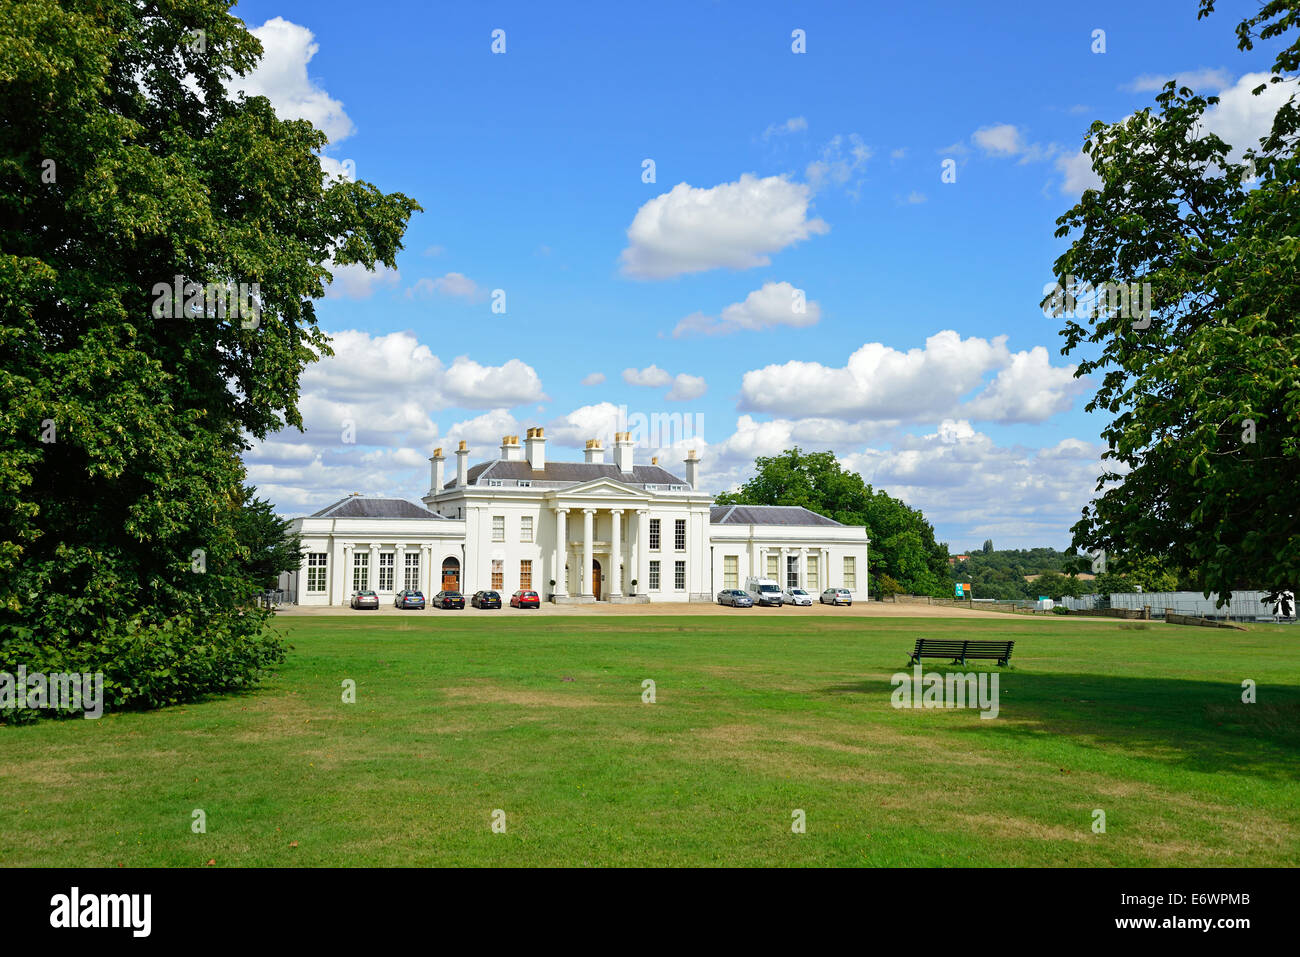 Le Hylands House, Hylands Park, Chelmsford, Essex, Angleterre, Royaume-Uni Banque D'Images